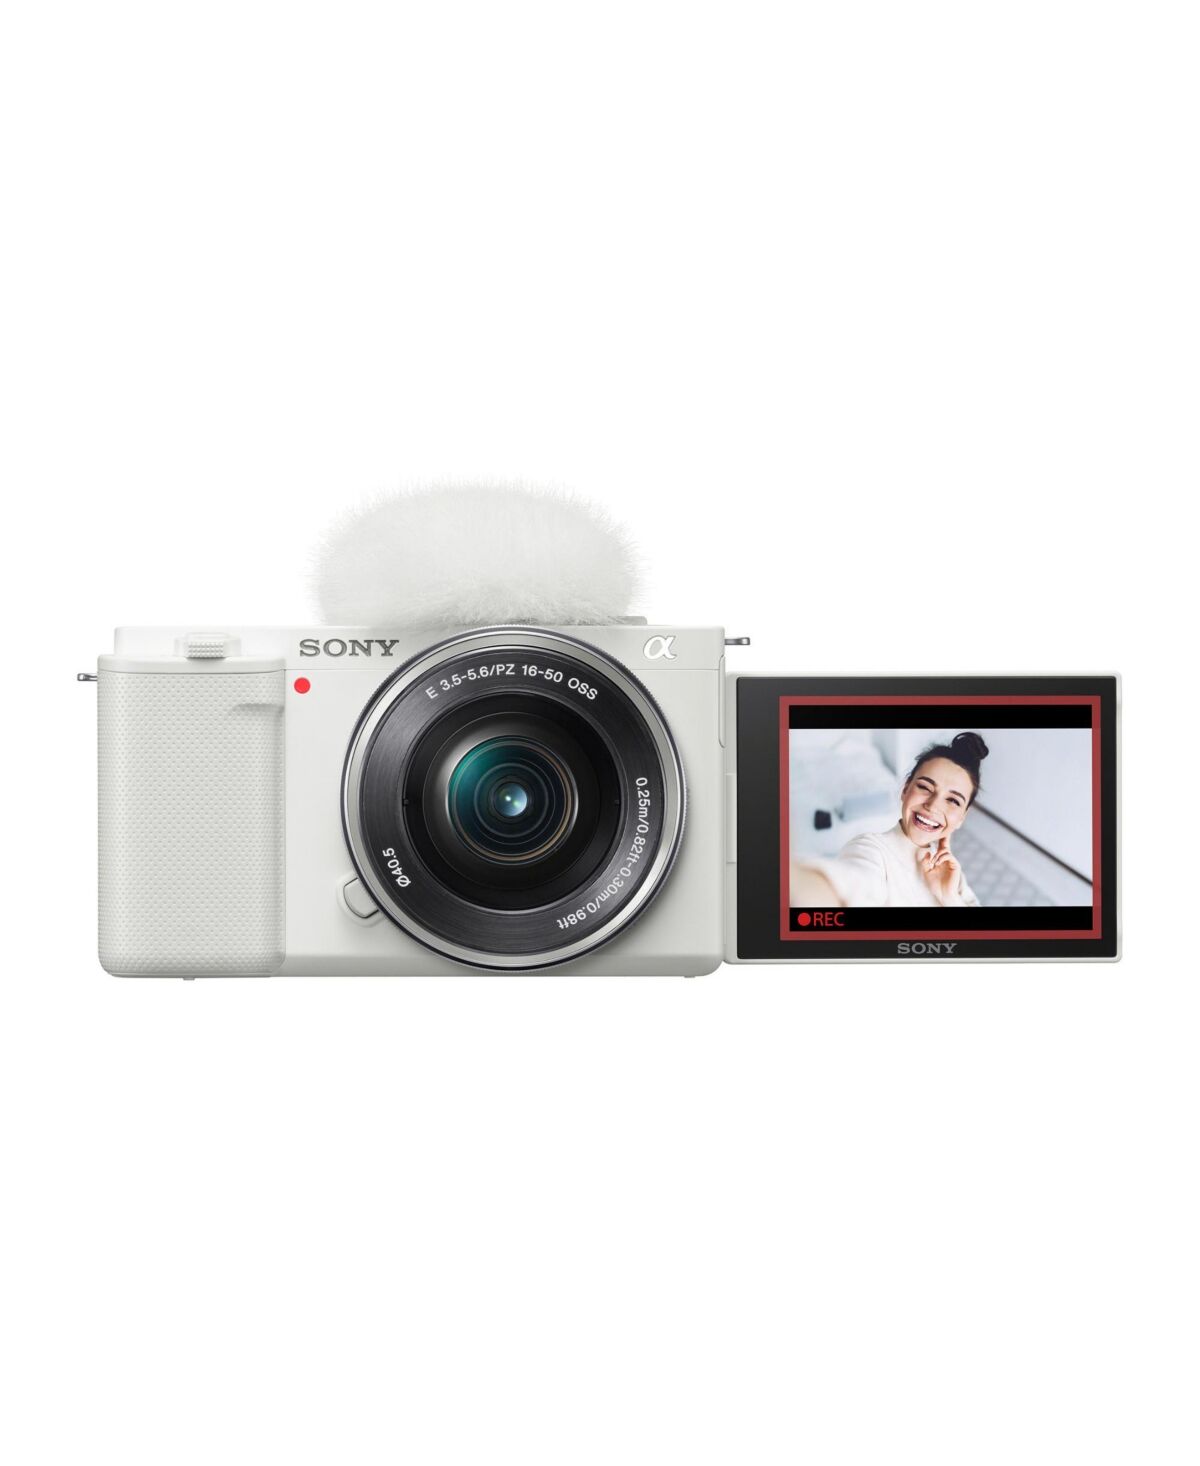 Sony Alpha Zv-E10 Aps-c Mirror less Vlog Camera with 16-50mm Lens (White) - White